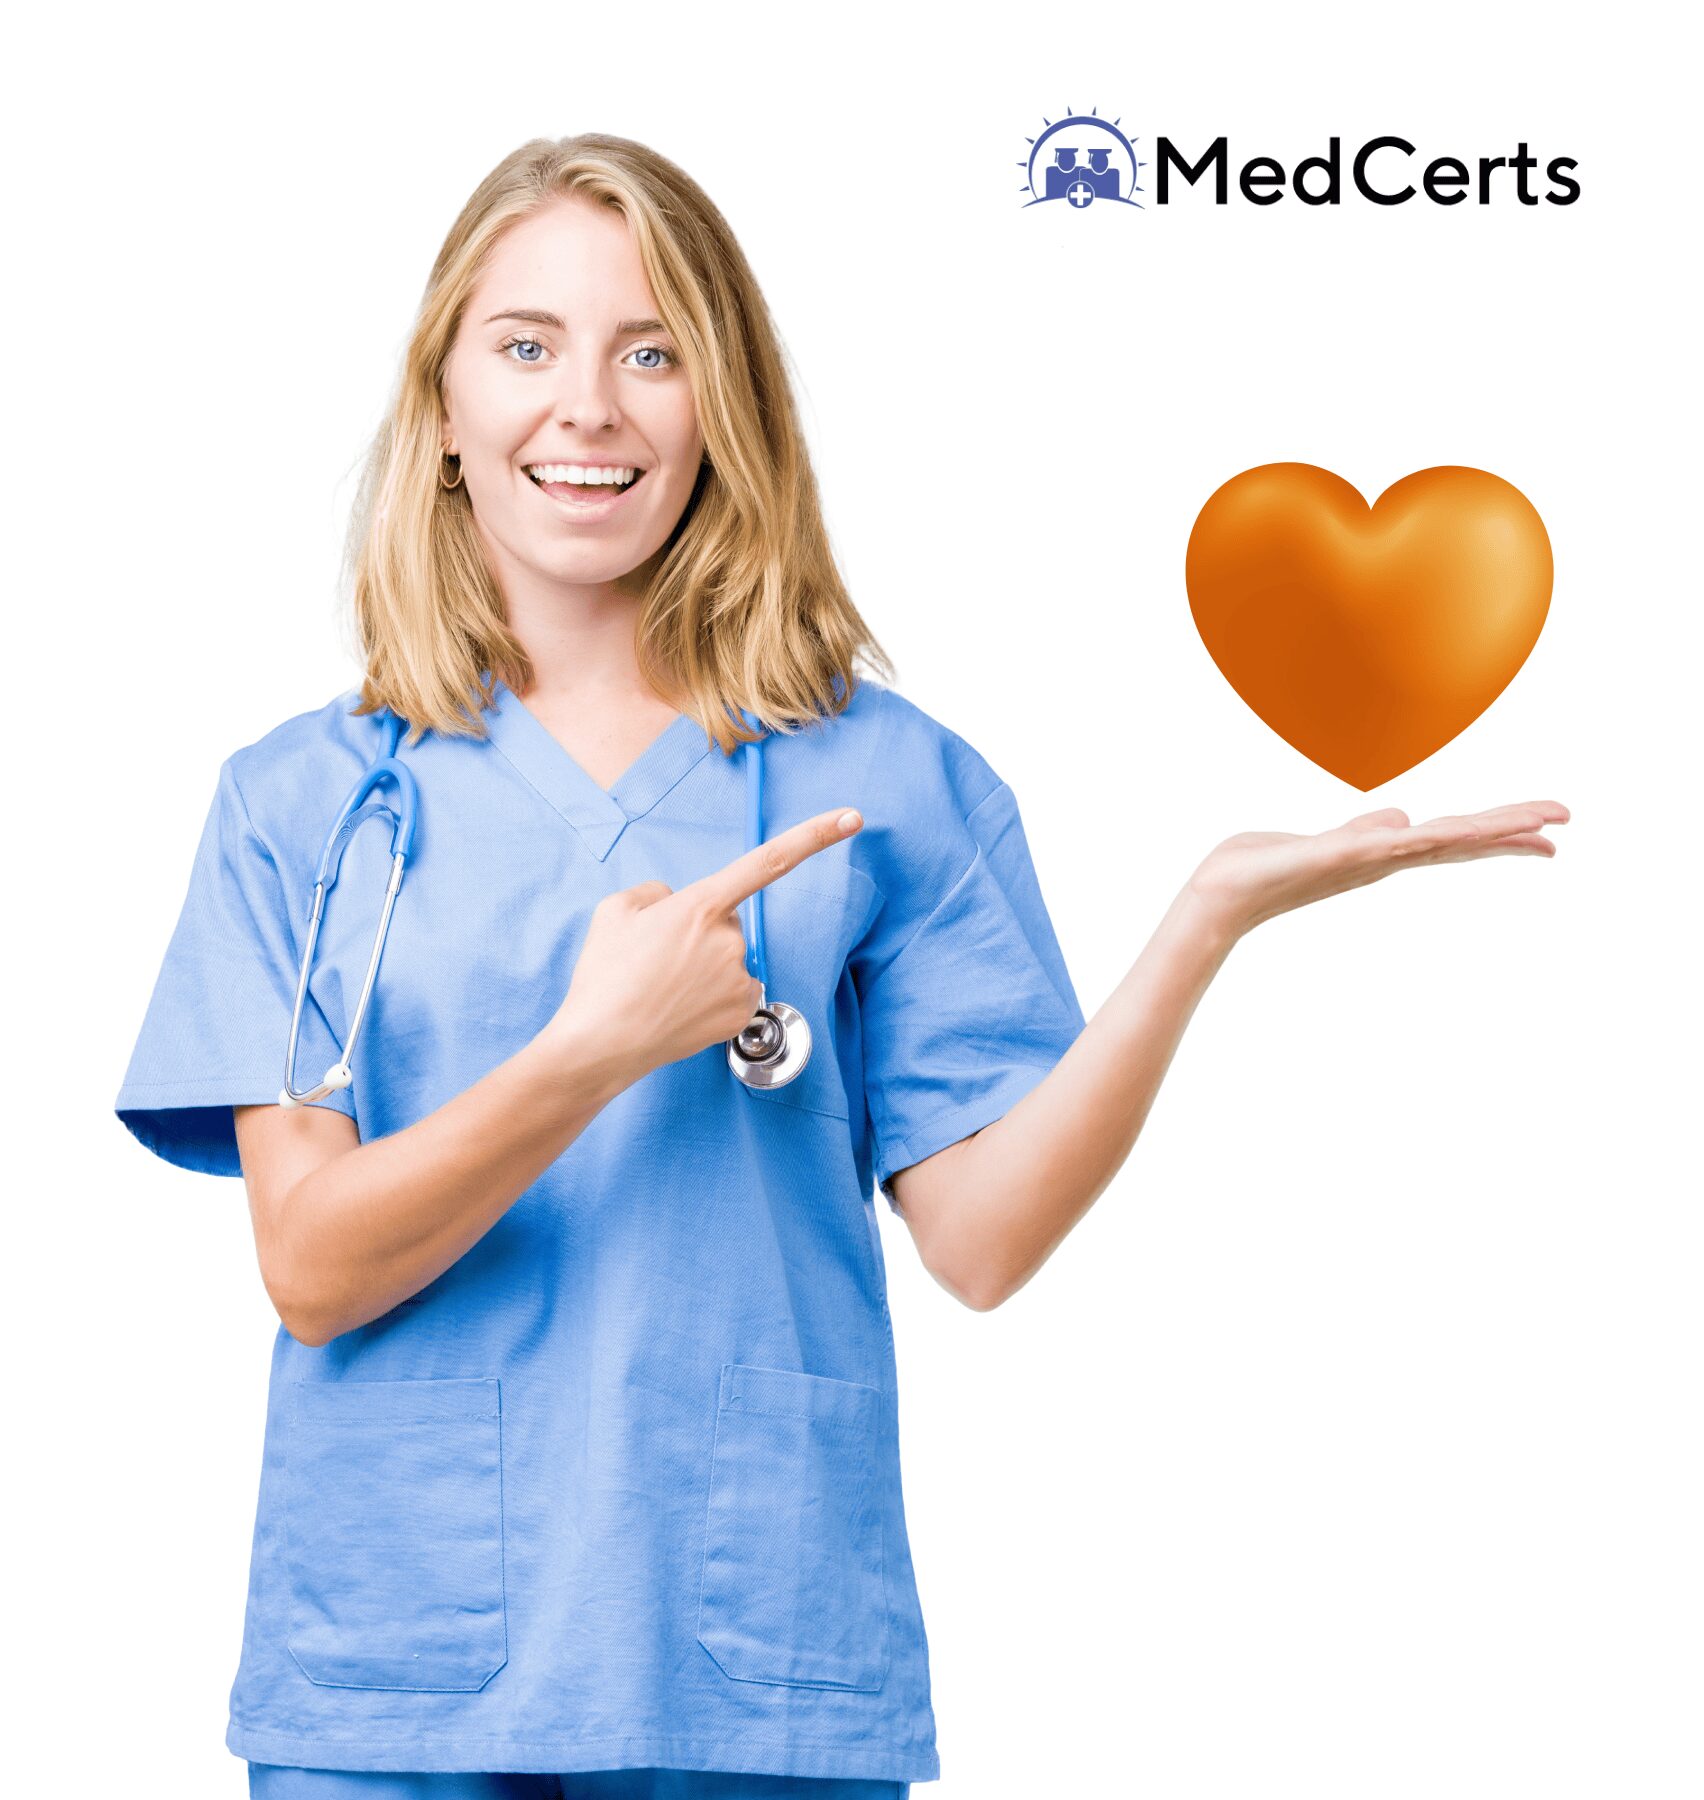 Adult Learning image 9 (name MedCerts Healthcare2)